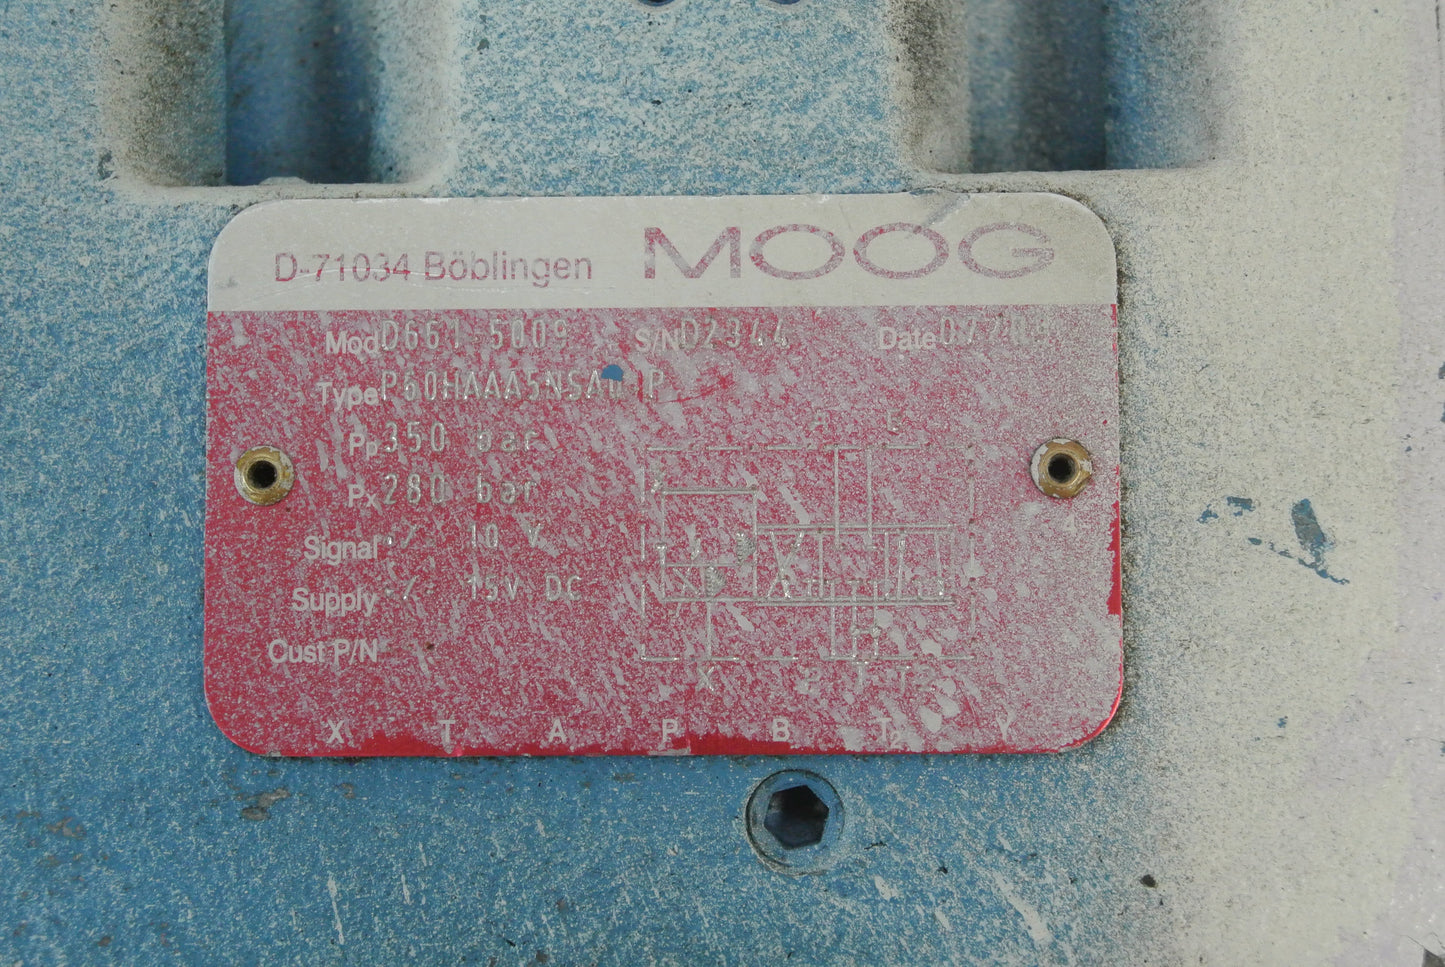 MOOG D661-5009 Hydraulic Servo Valve - we